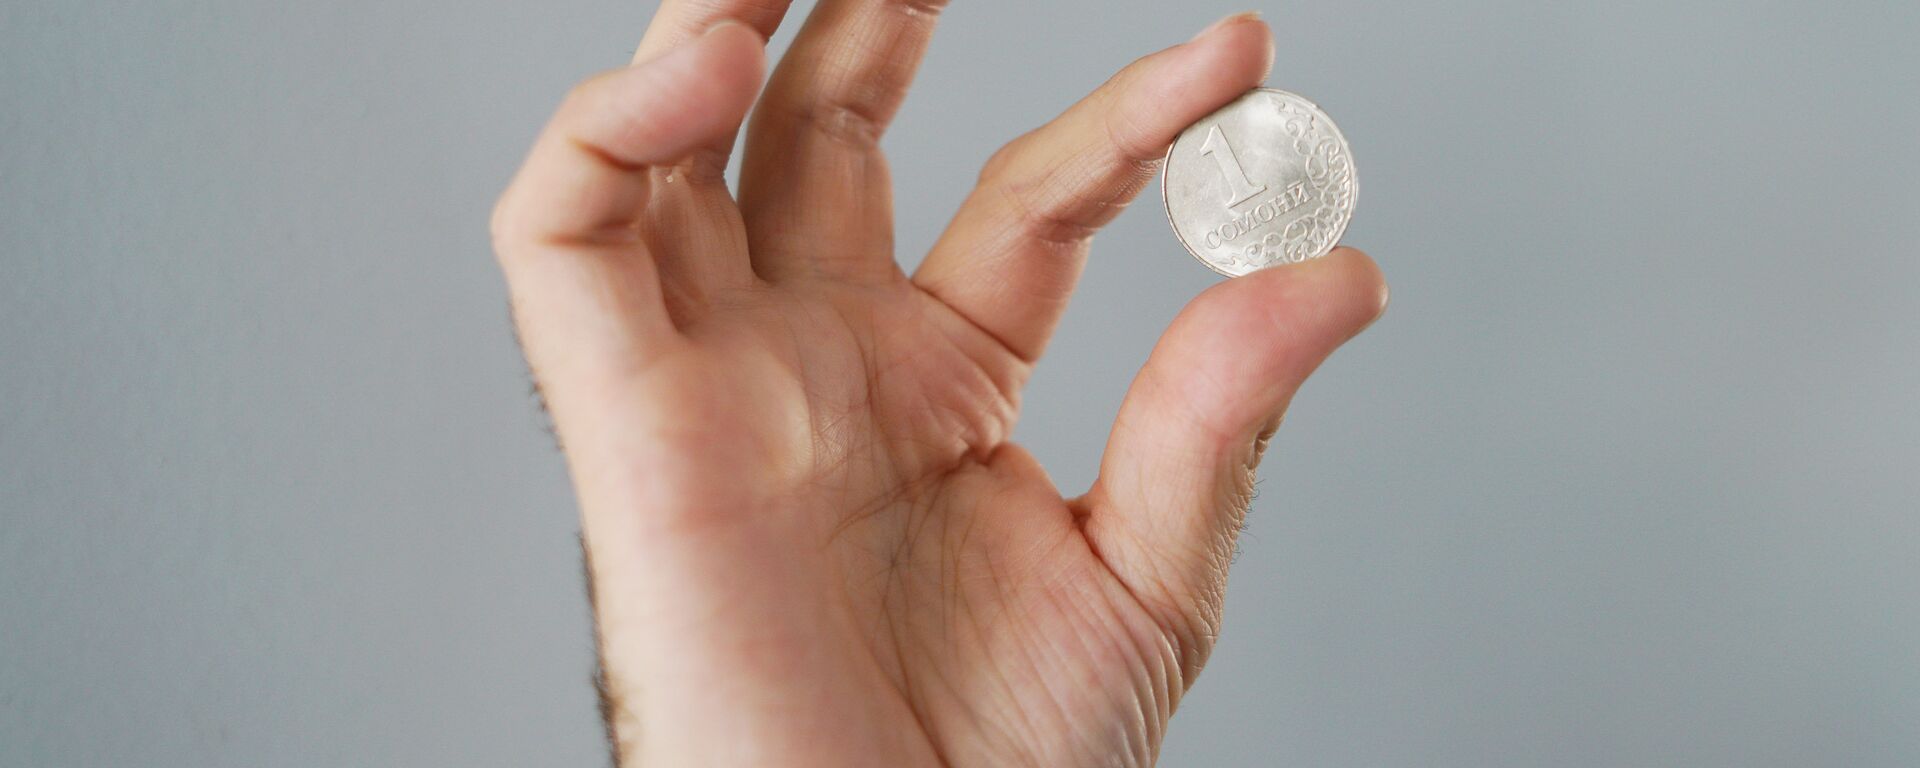 Монета один сомони в руке, архивное фото - Sputnik Таджикистан, 1920, 31.03.2021